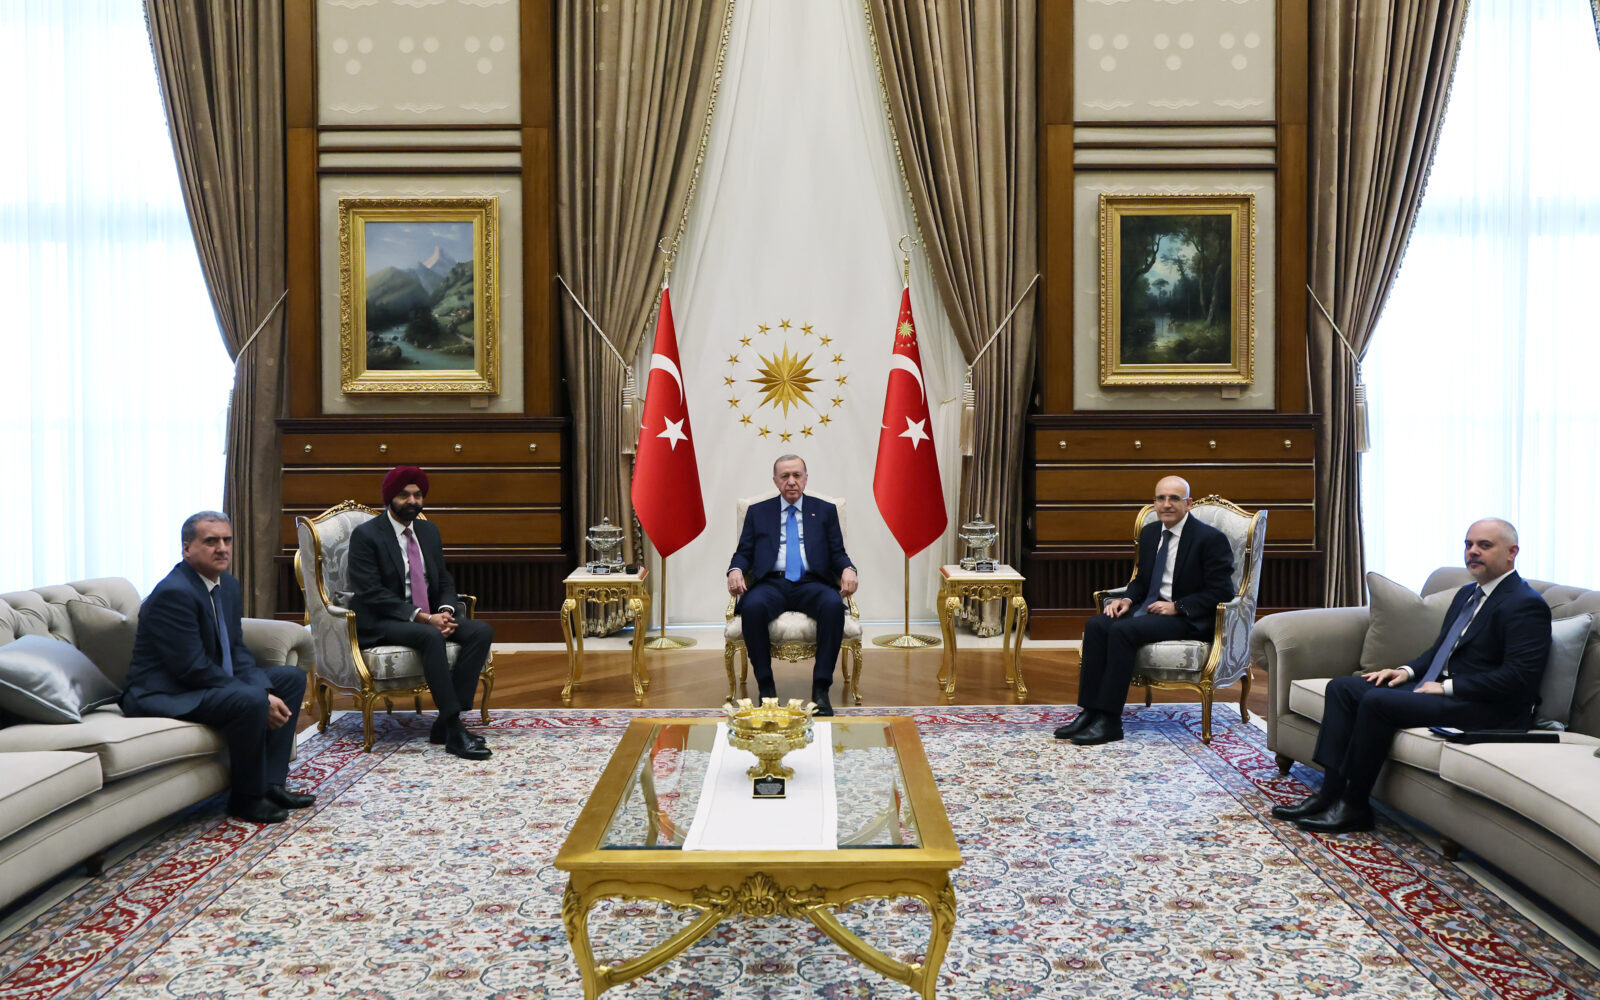 Türkiye's path to high-income status: Key talks with World Bank Chief